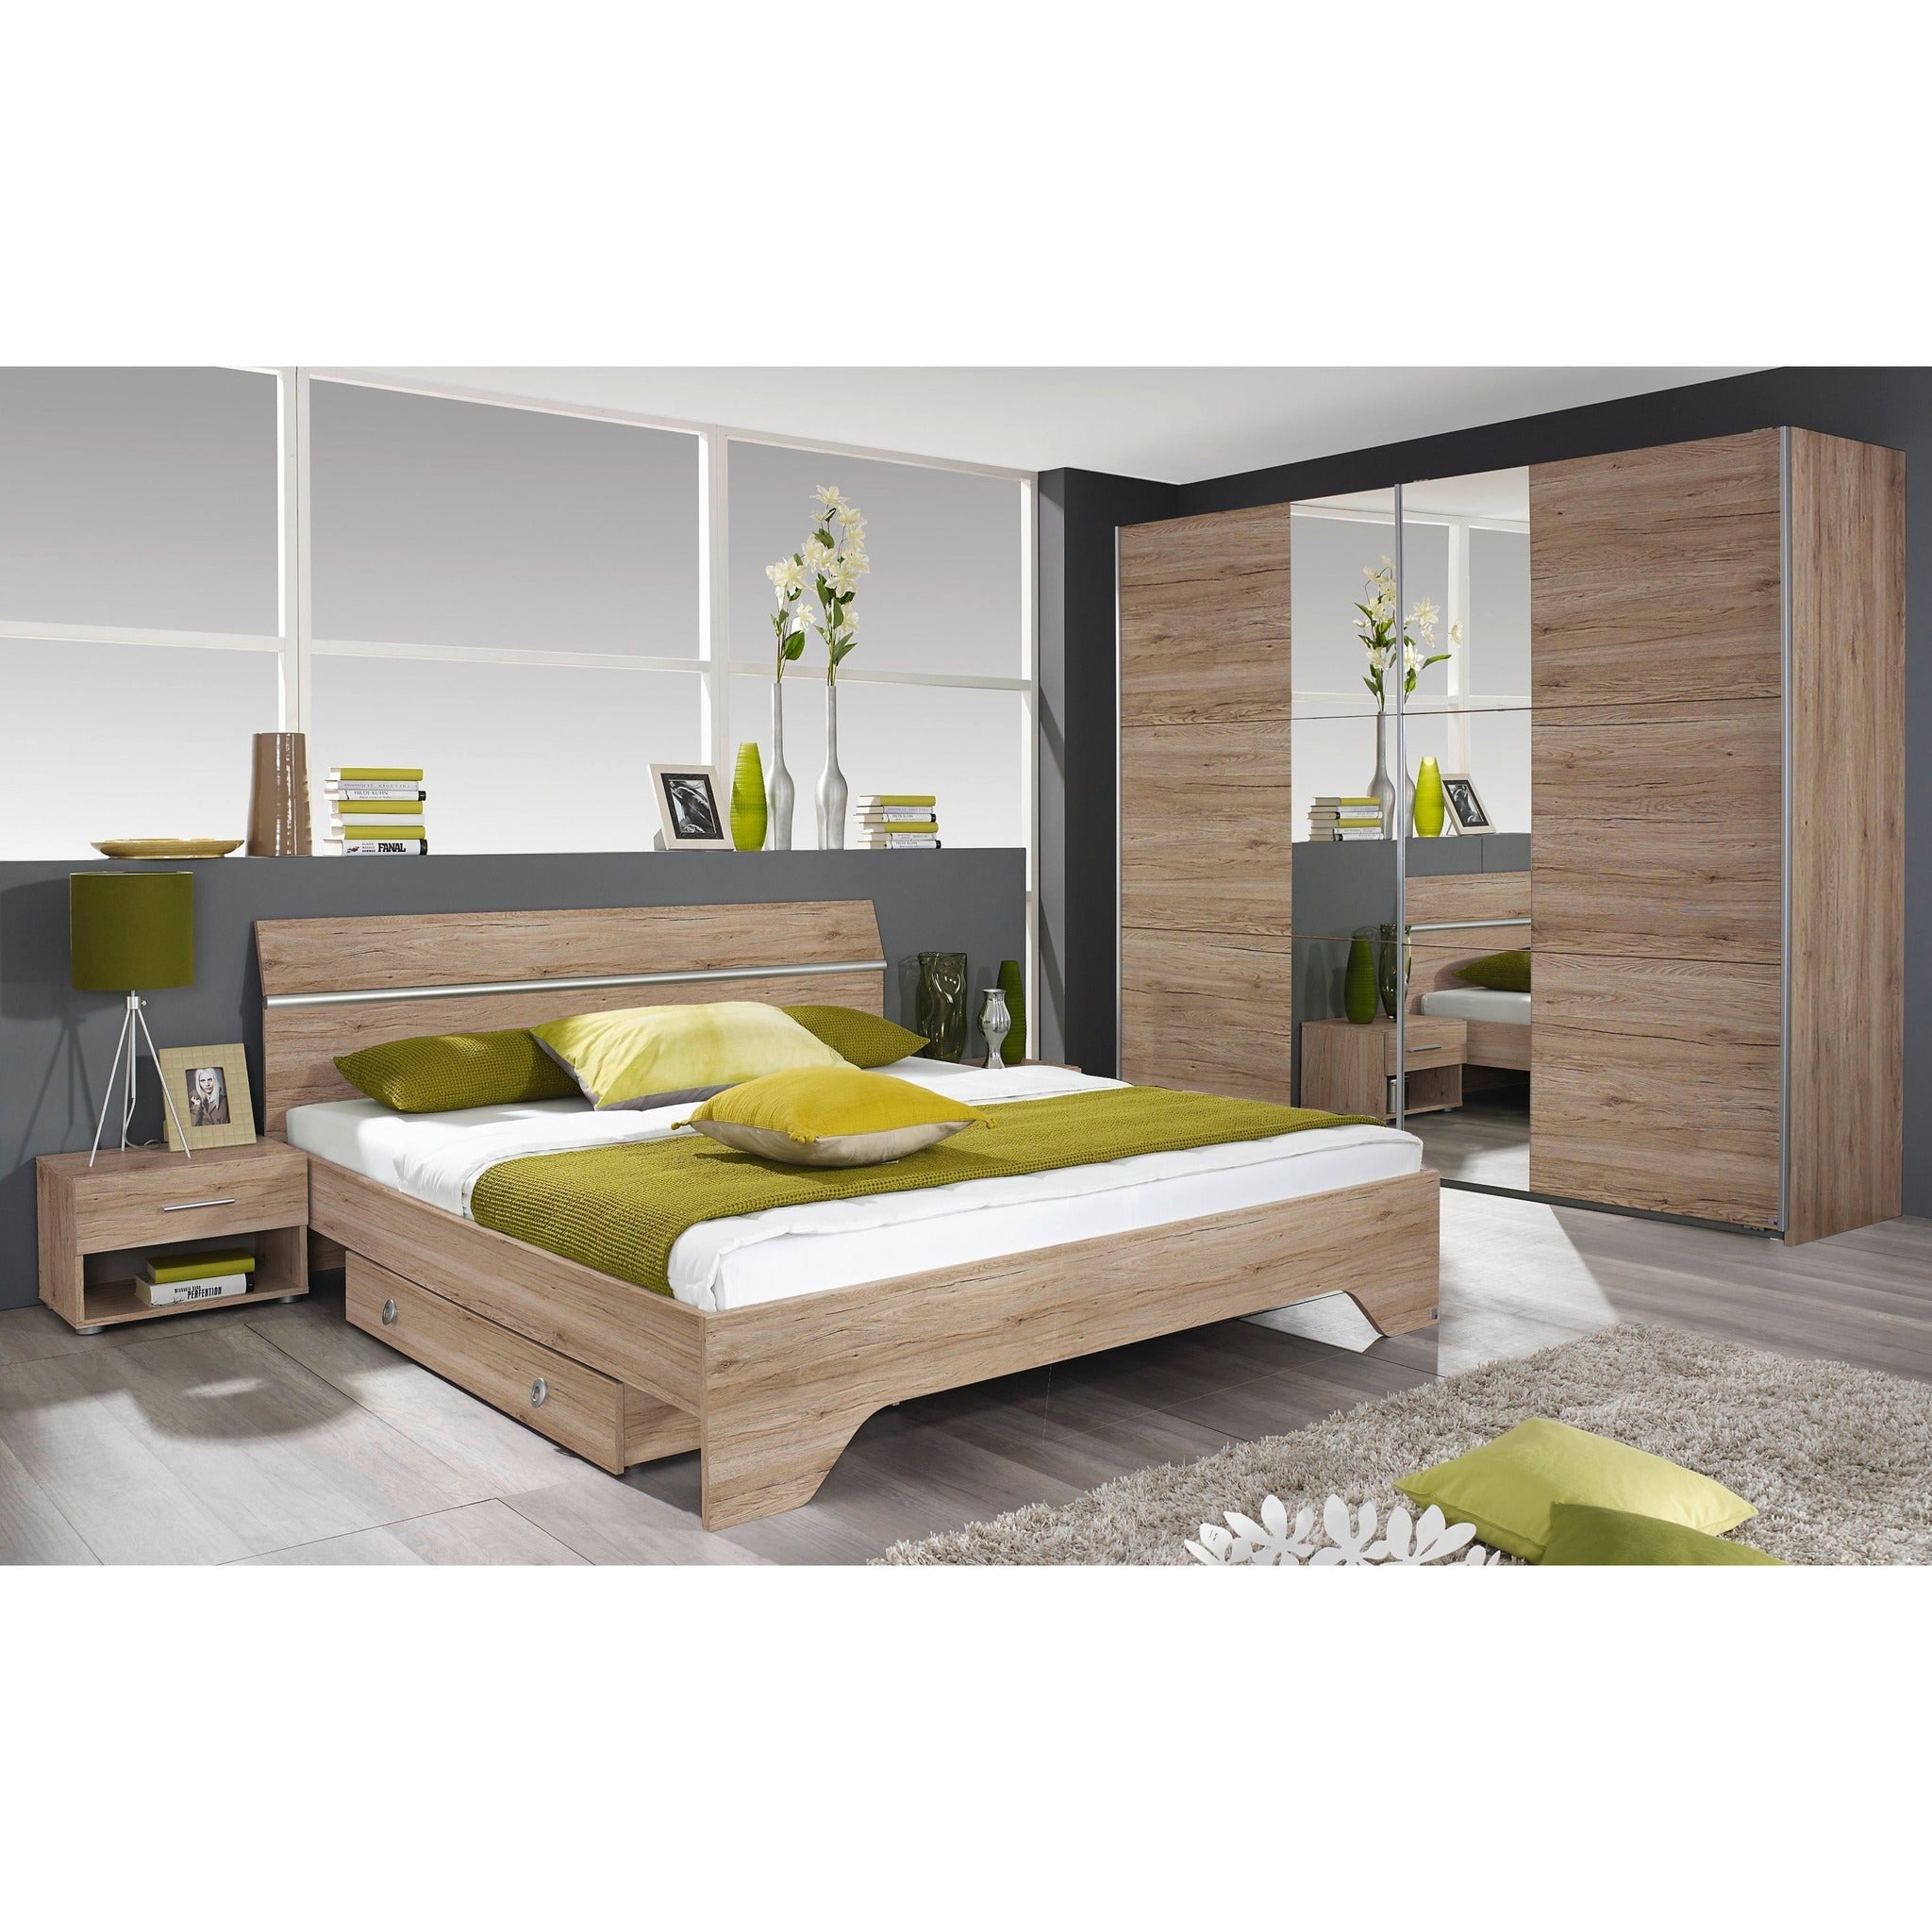 Rauch Fellbach Range German Made Bedroom Furniture San